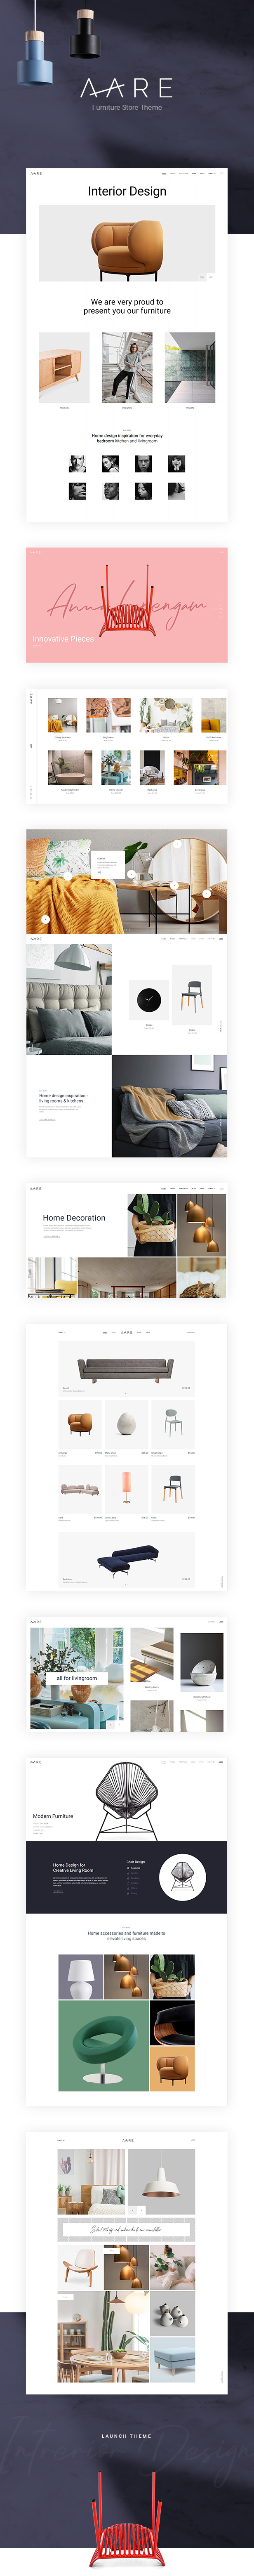 Aare - Furniture Store WordPress Theme - 1